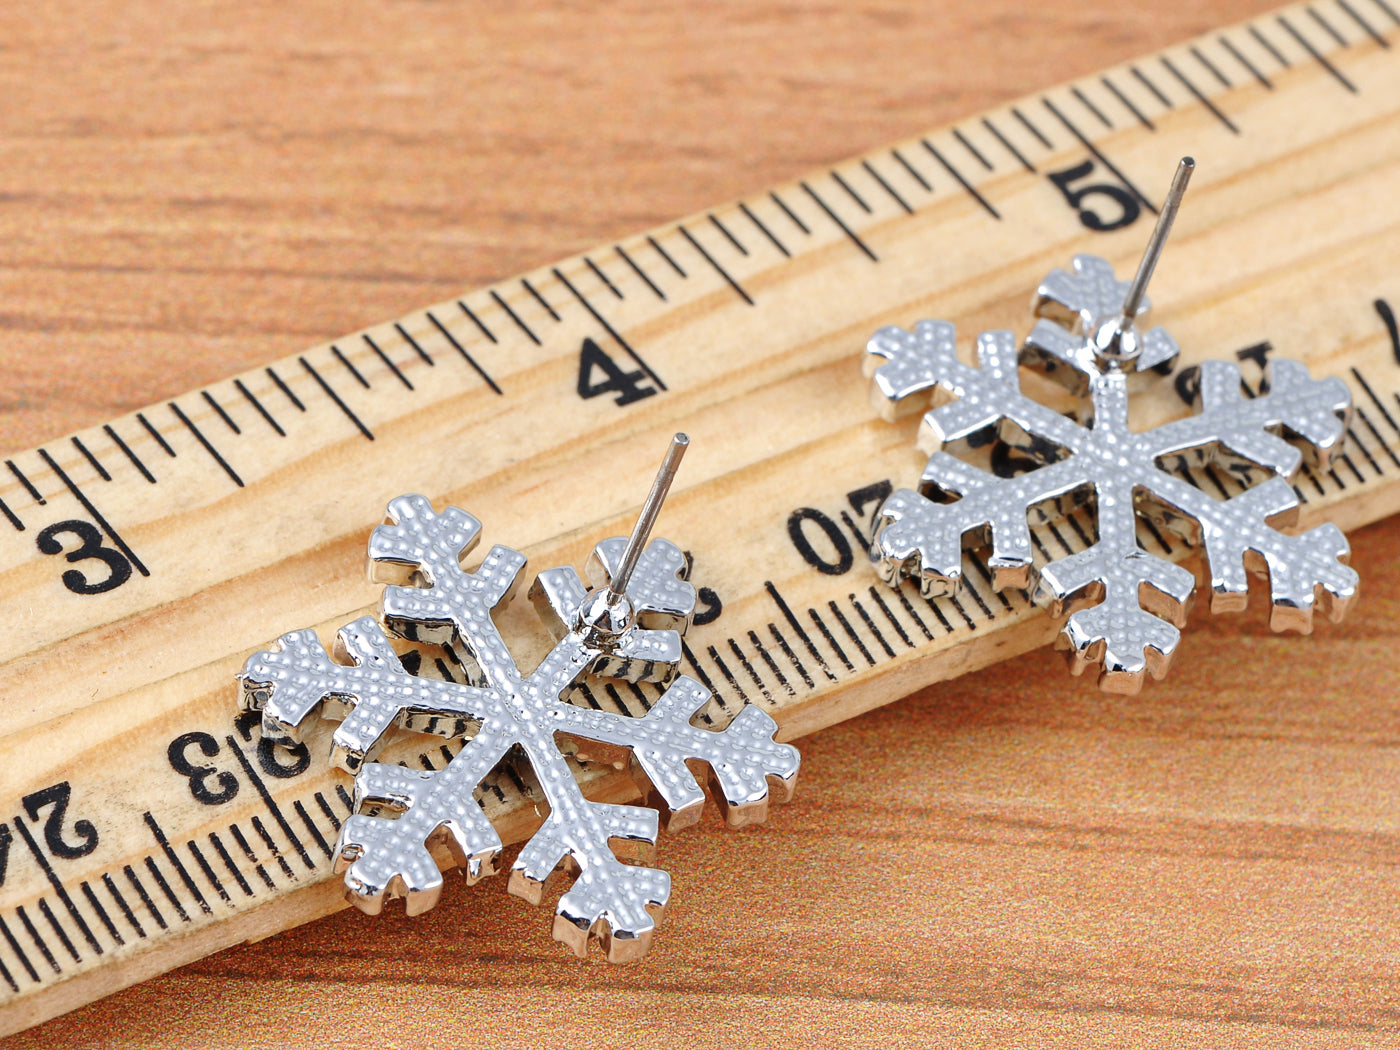 Festive Holiday Winter Snowflake Stud Earrings